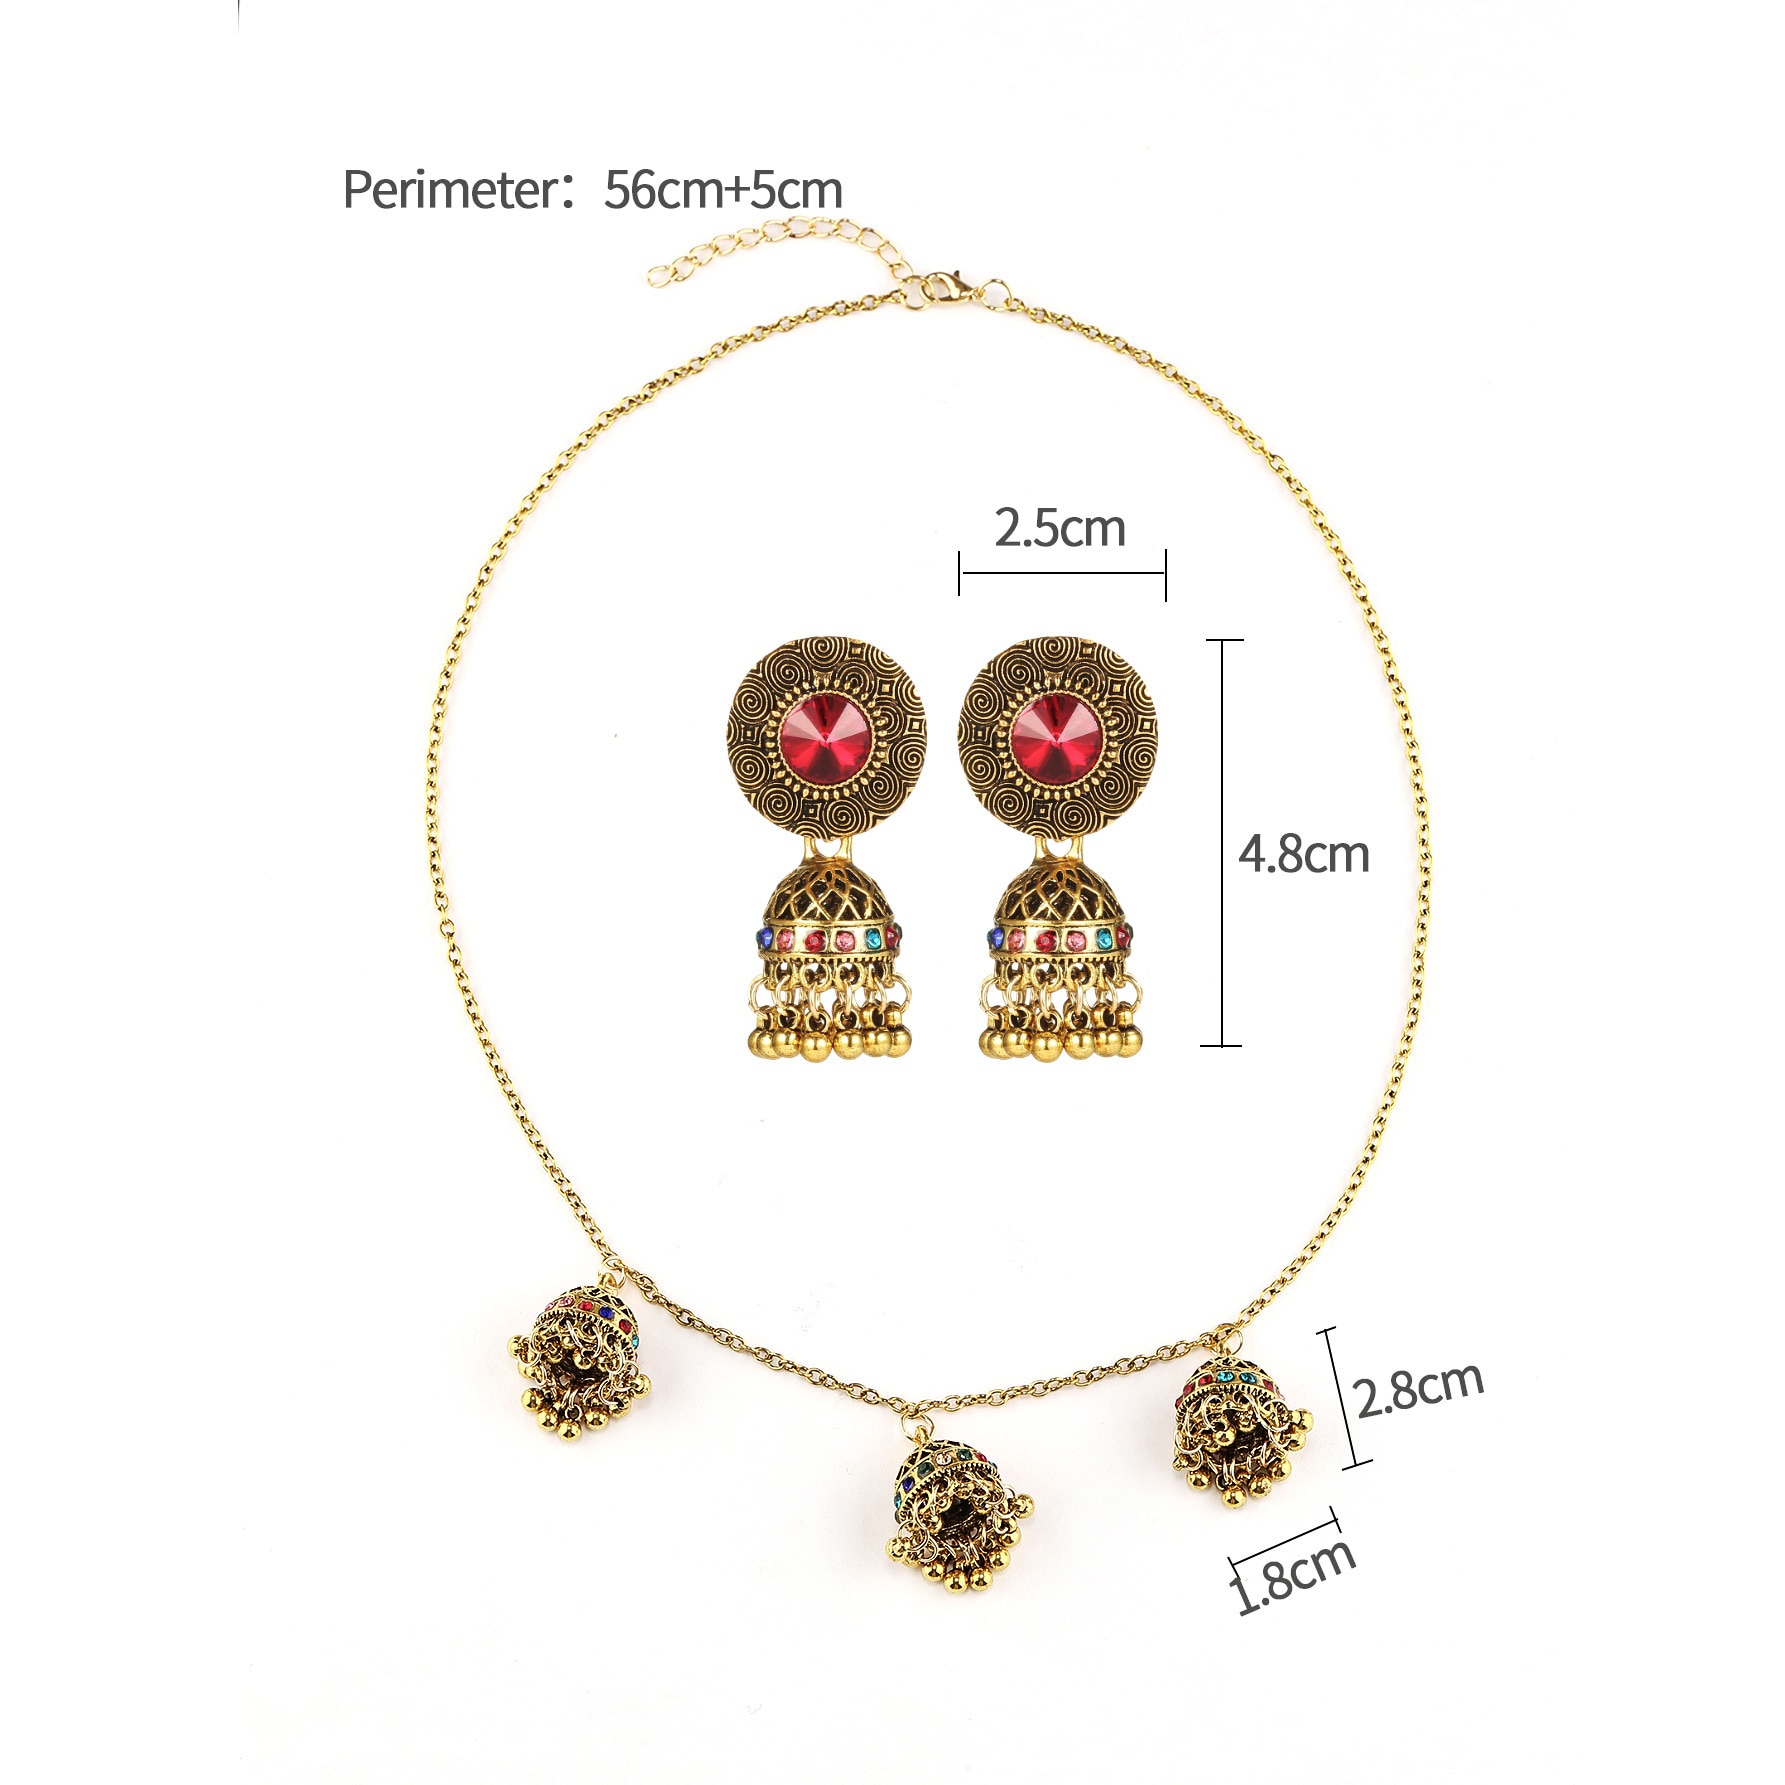 New-Women39s-Indian-Jewelry-Set-EarringNecklace-Wedding-Jewelry-Hangers-Luxury-Retro-Red-CZ-Geometry-1005004536295375-6